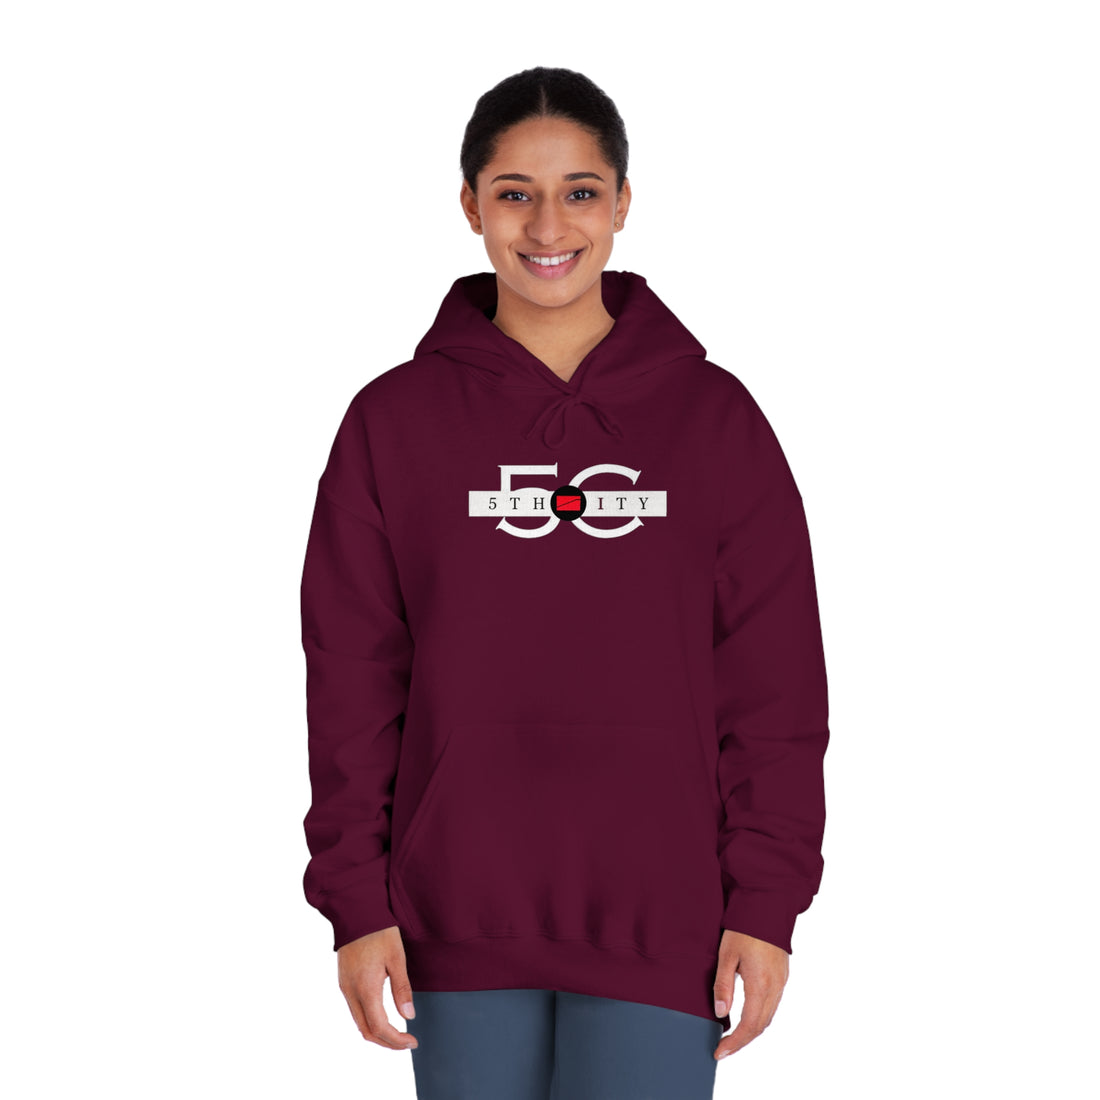 5thCity Unisex DryBlend® Hooded Sweatshirt